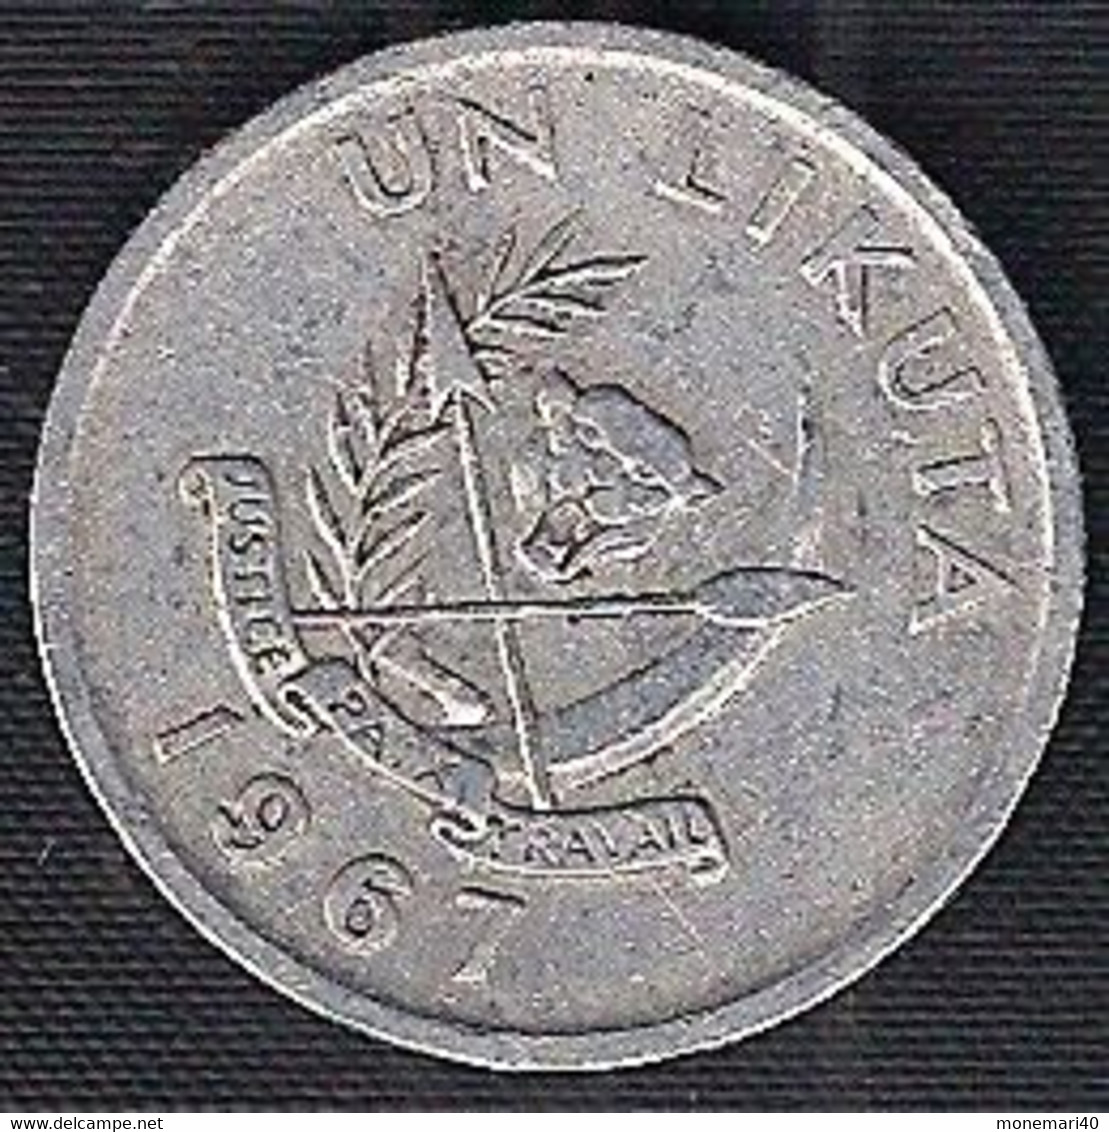 CONGO 1 LIKUTA - 1967 - Congo (Democratic Republic 1964-70)